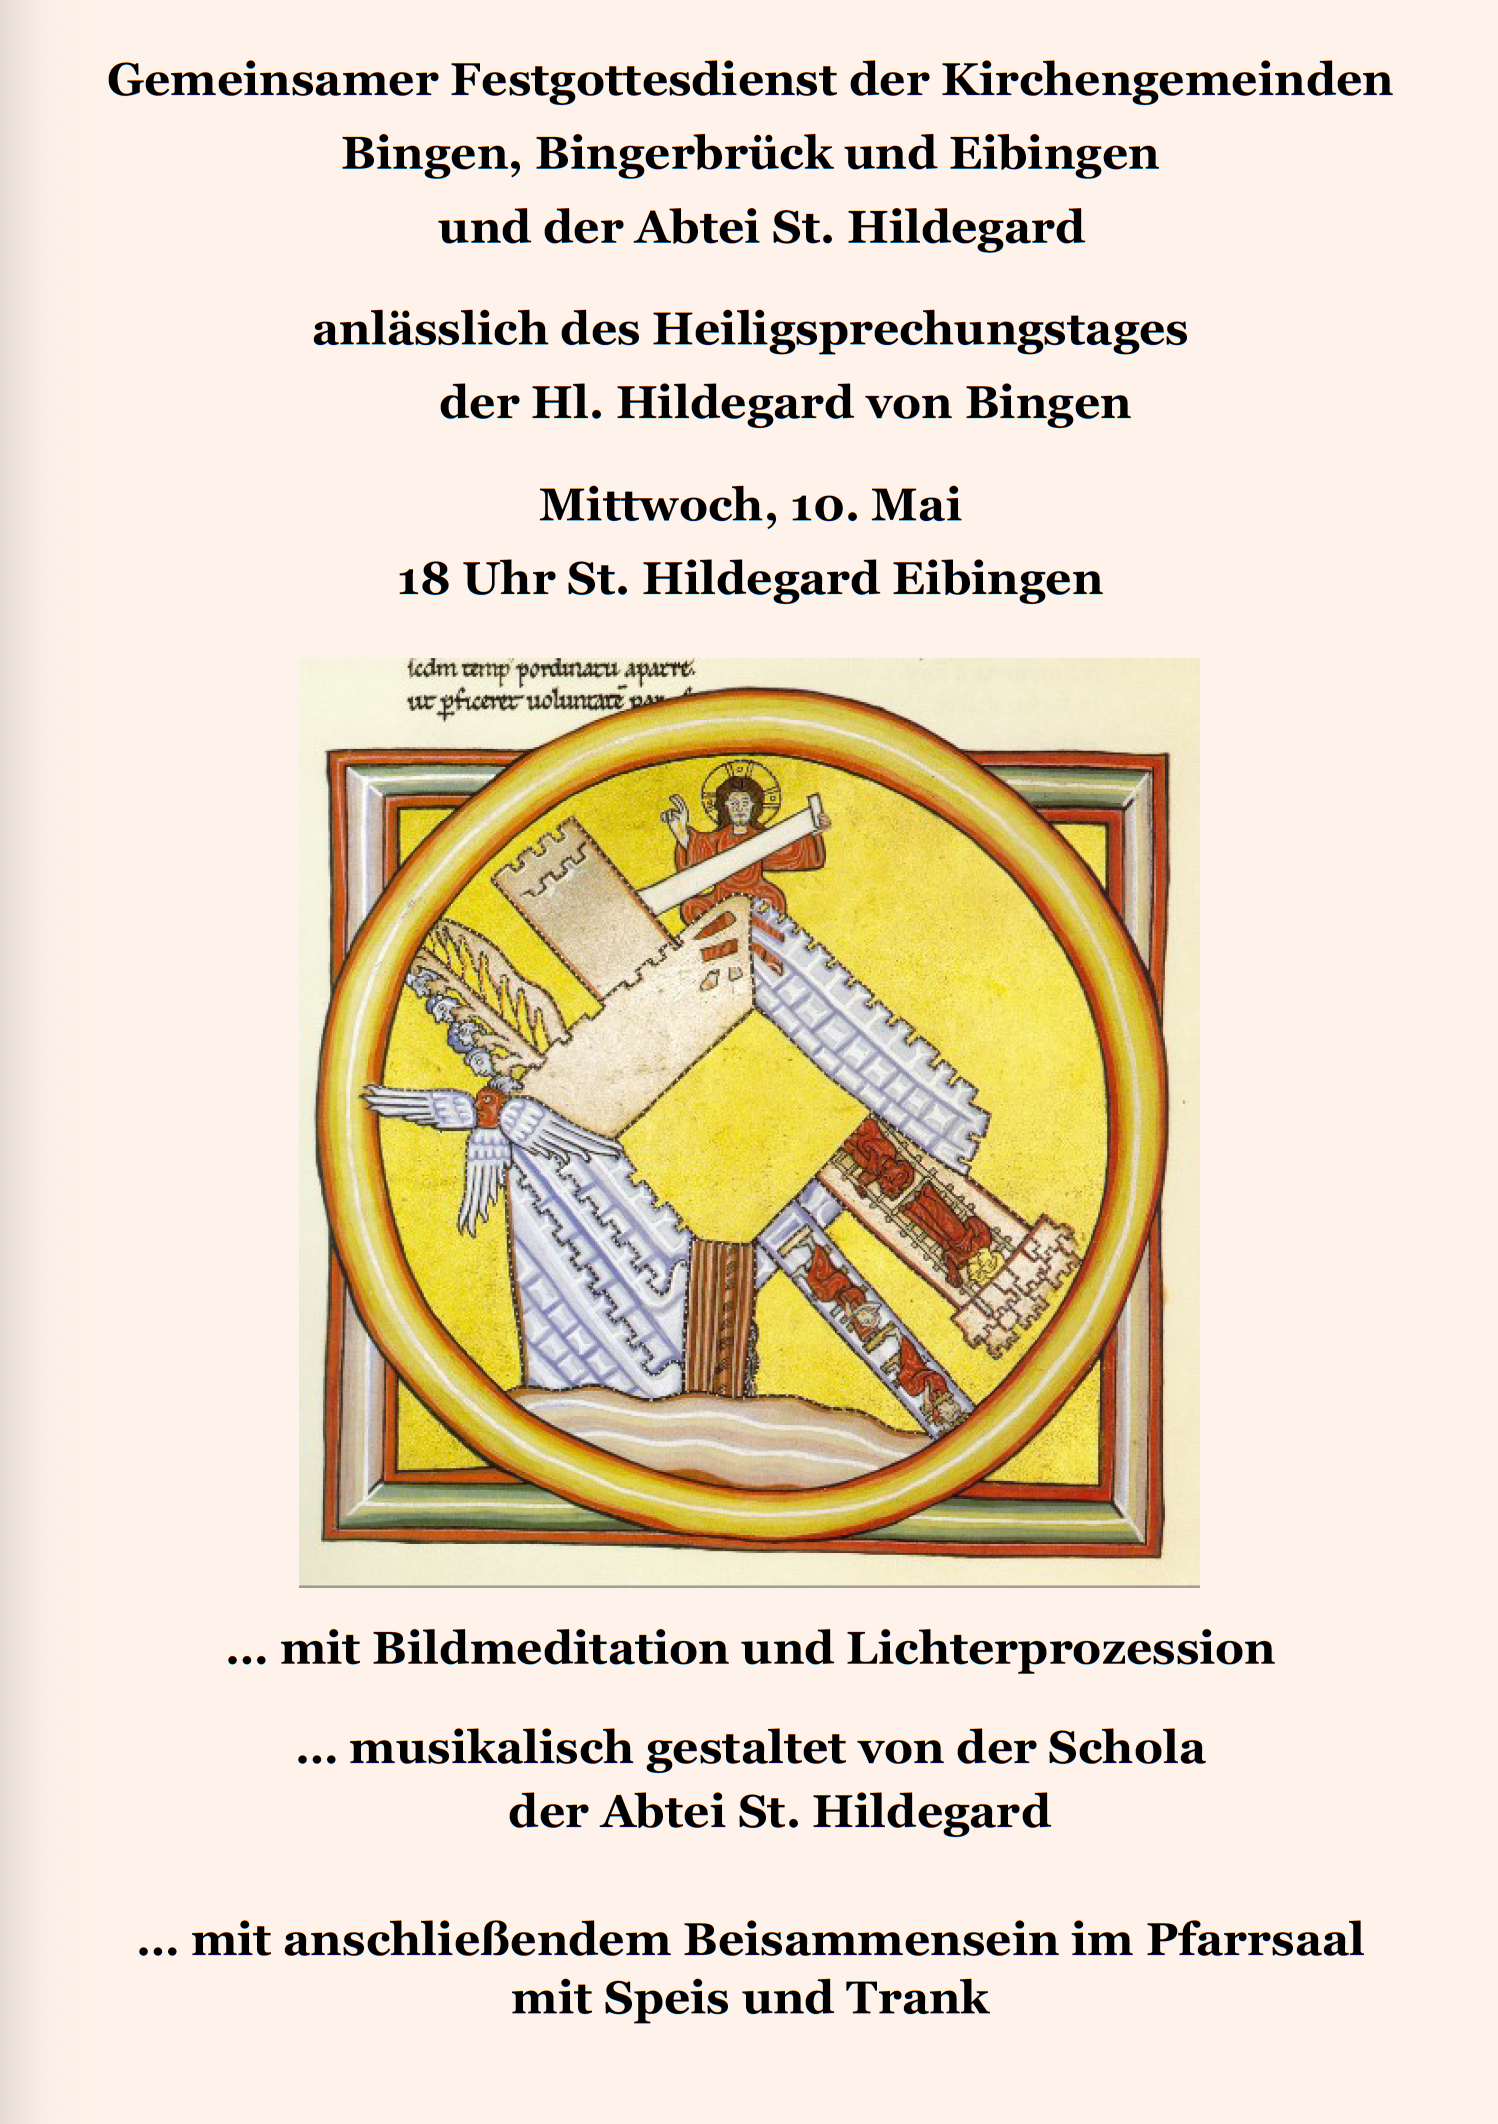 2023.05.10_Festgottesdienst Heilige Hildegard (c) Abteil St. Hildegard